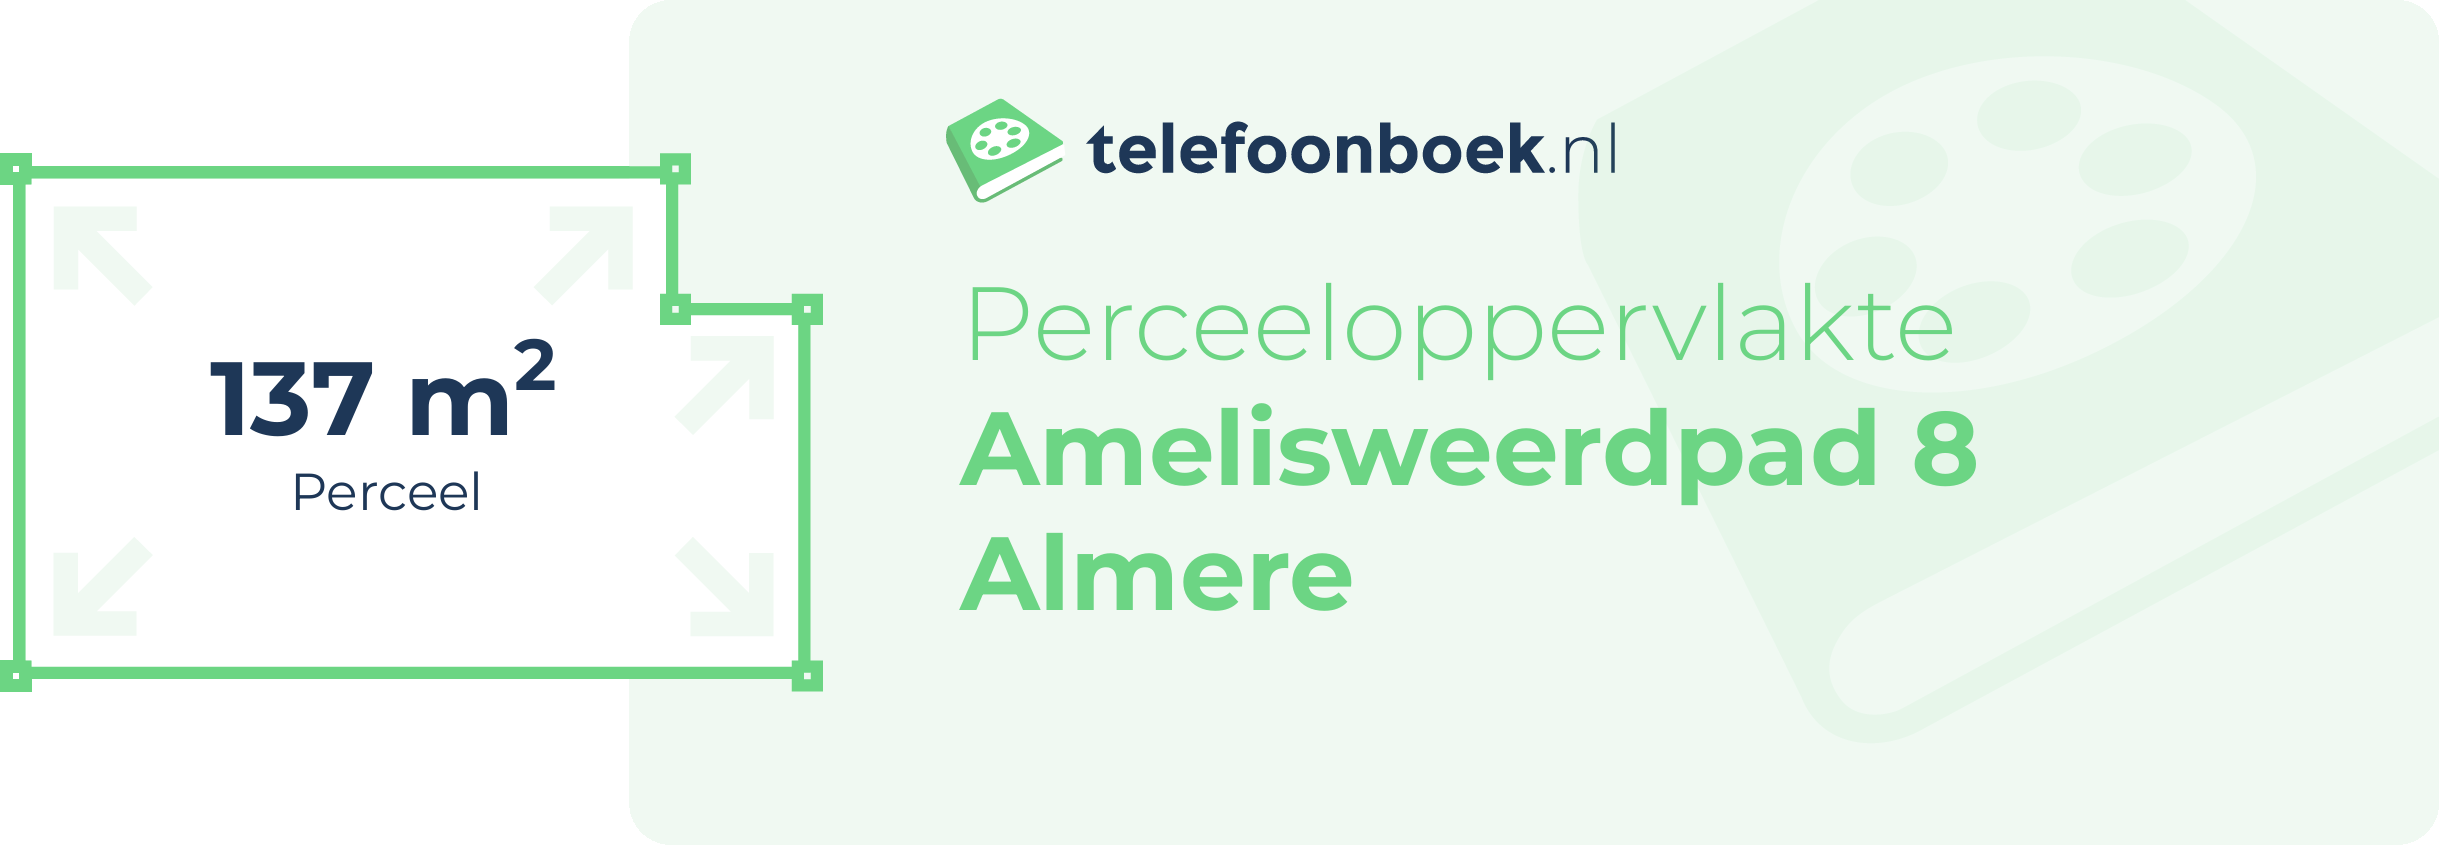 Perceeloppervlakte Amelisweerdpad 8 Almere